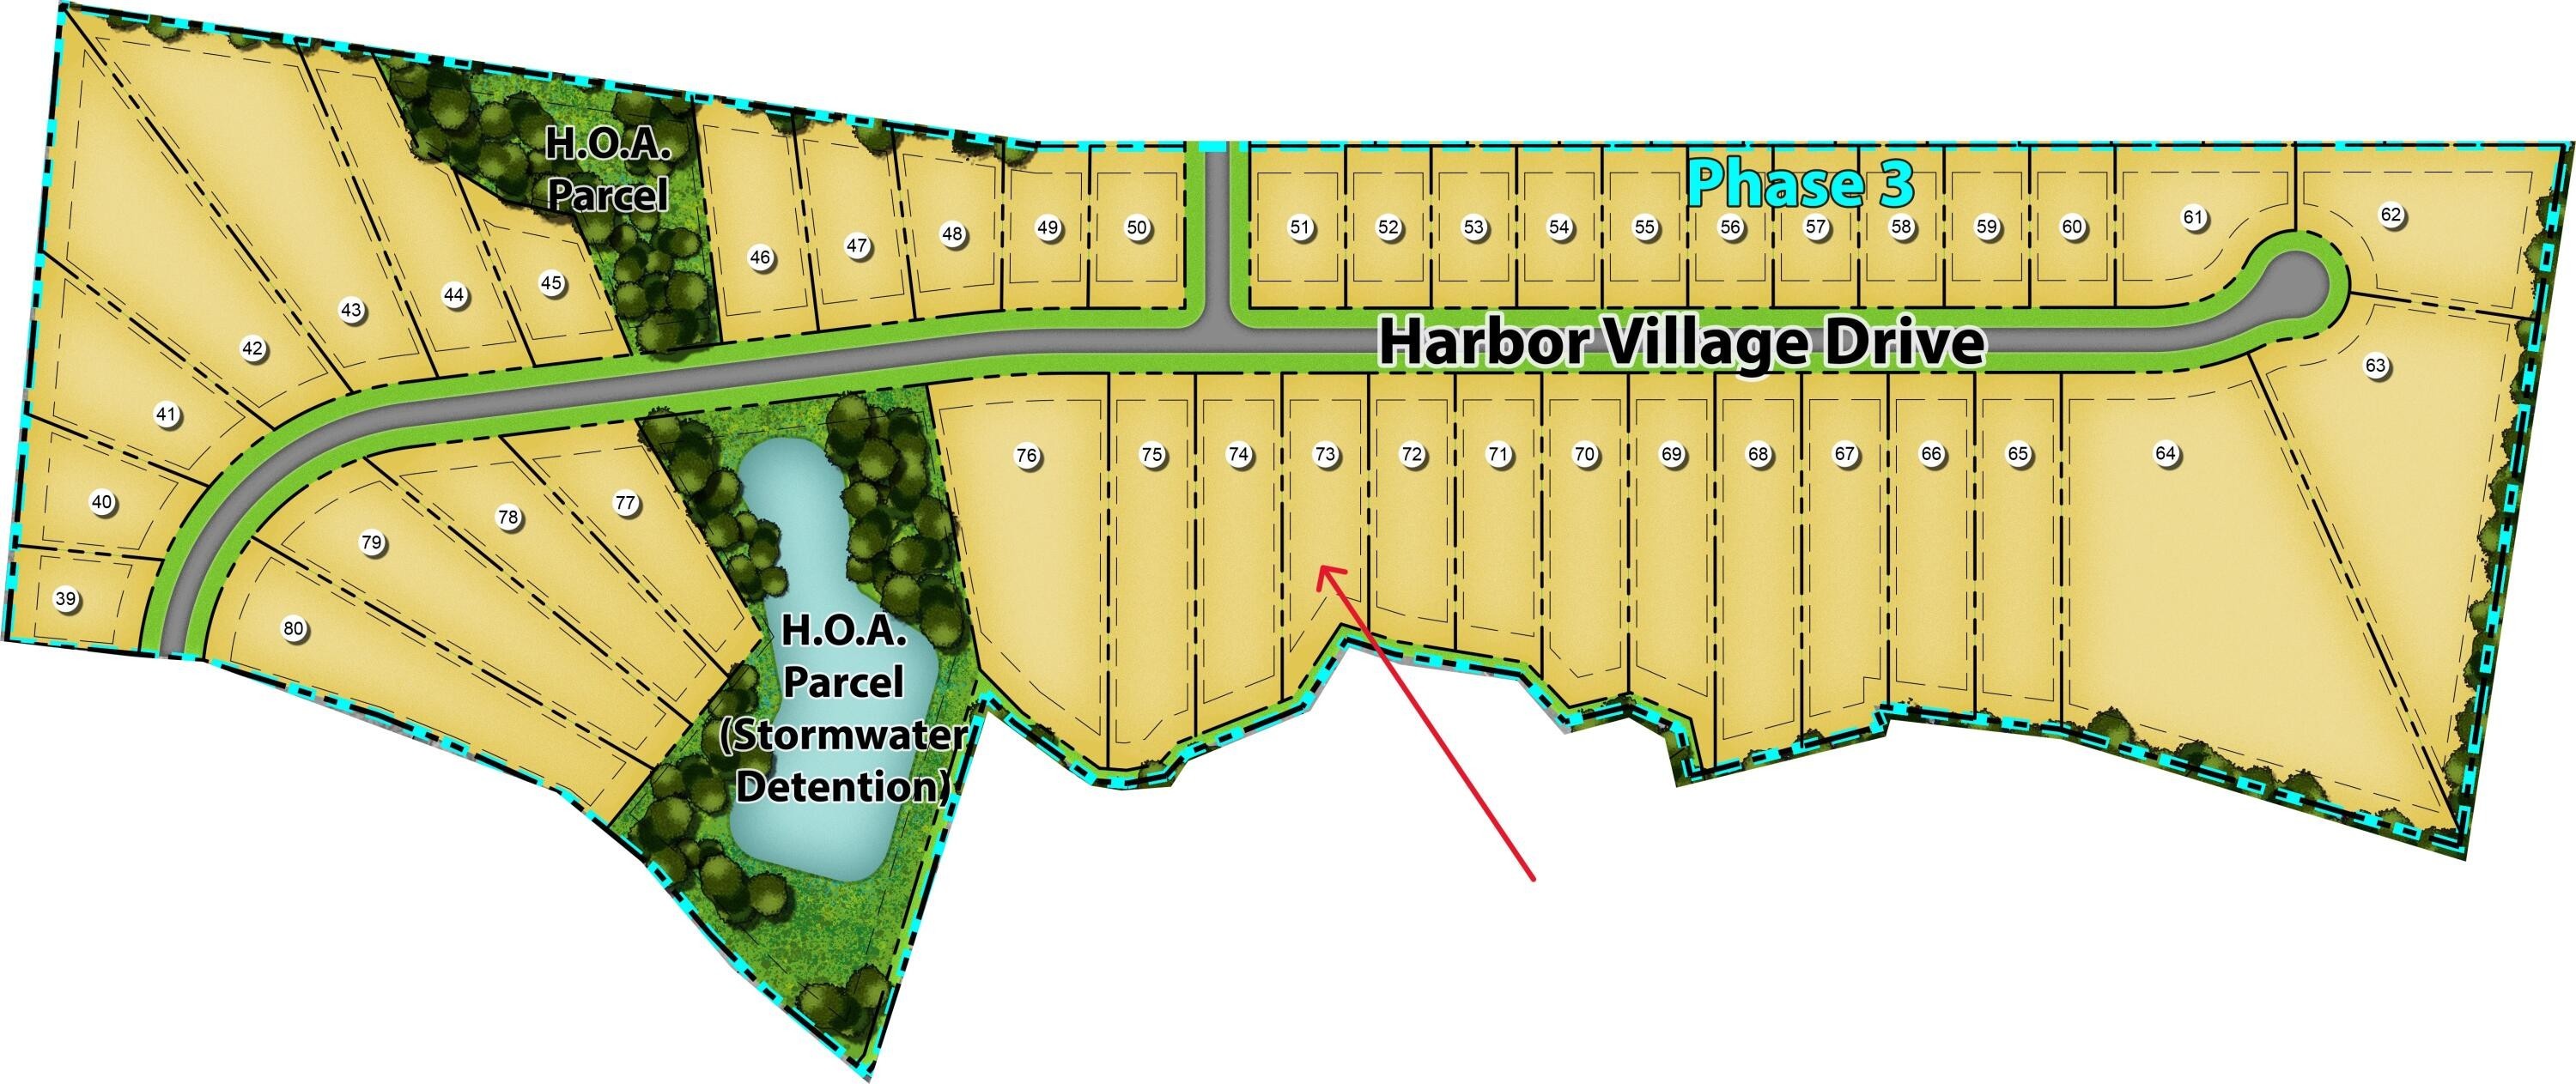 1. 265 Harbor Village Drive